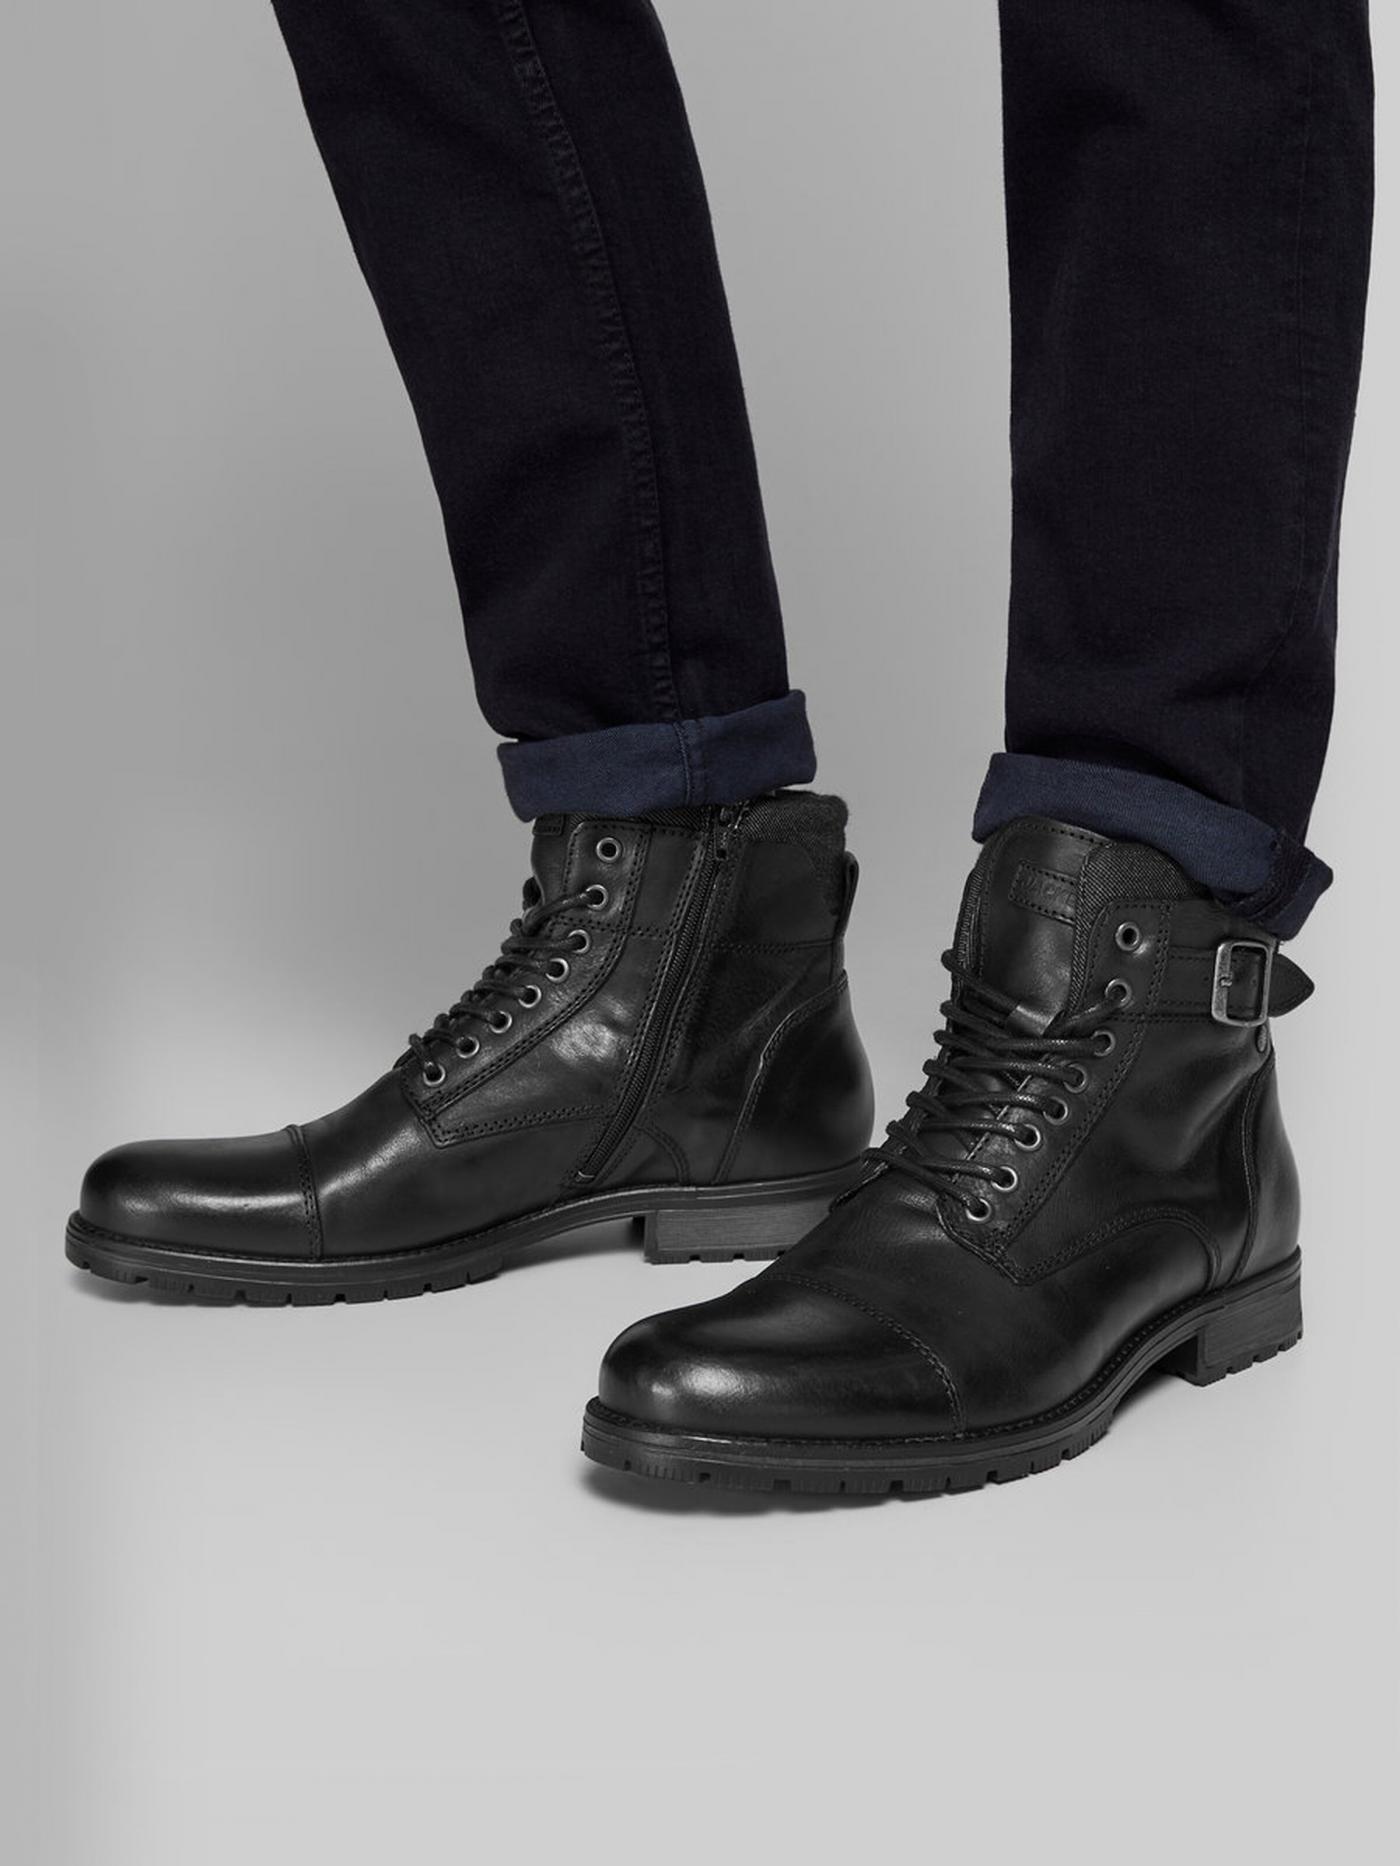 Melbourne adopteren Martin Luther King Junior Leather Boots | JACK & JONES Mens Boots » Sara Gamarro